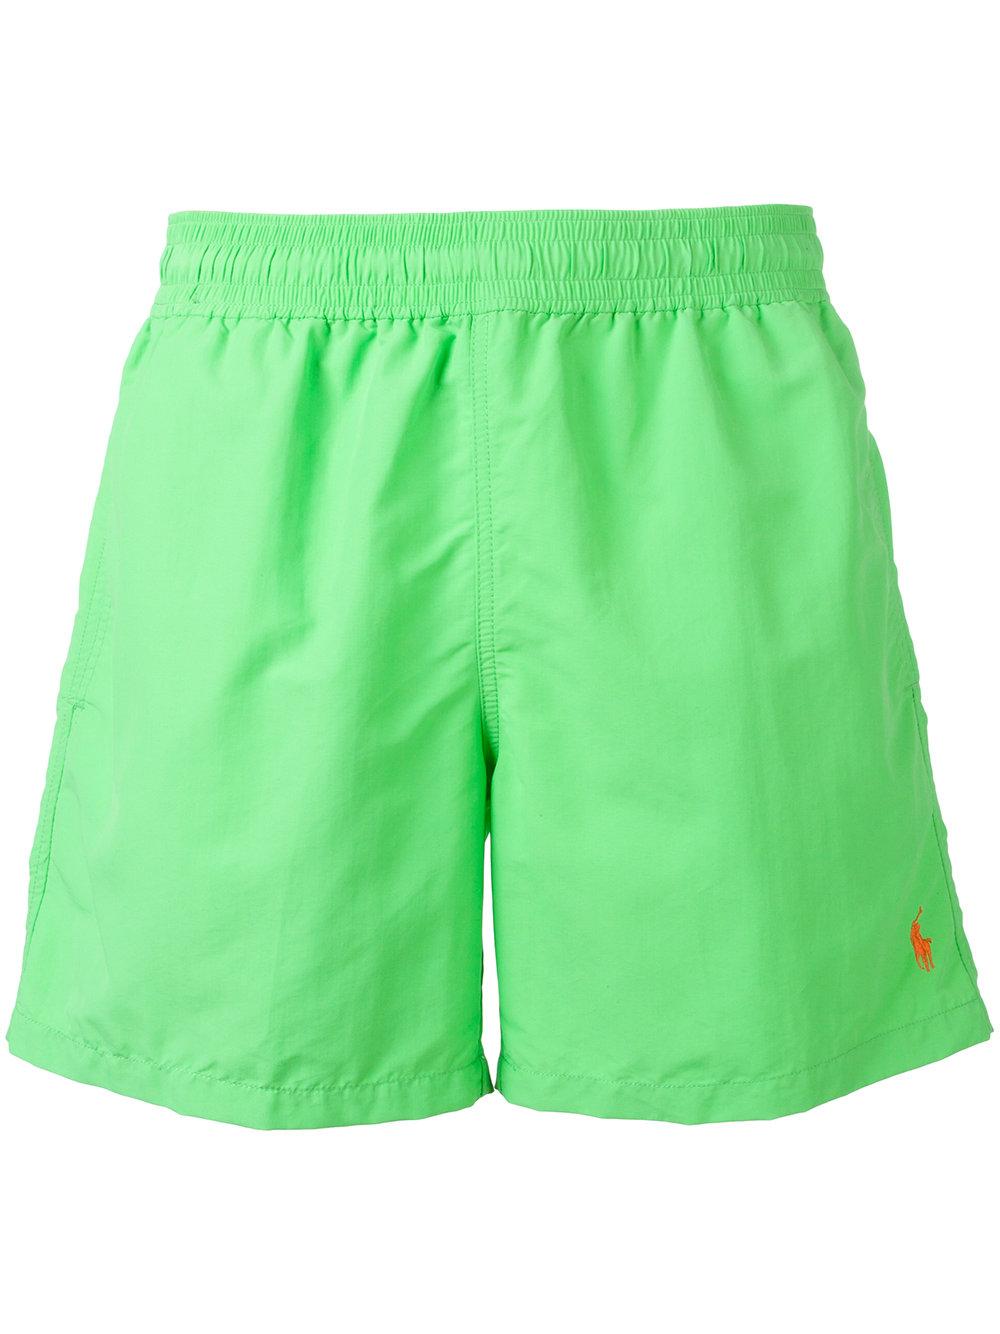 Lyst - Polo Ralph Lauren Swim Shorts in Green for Men